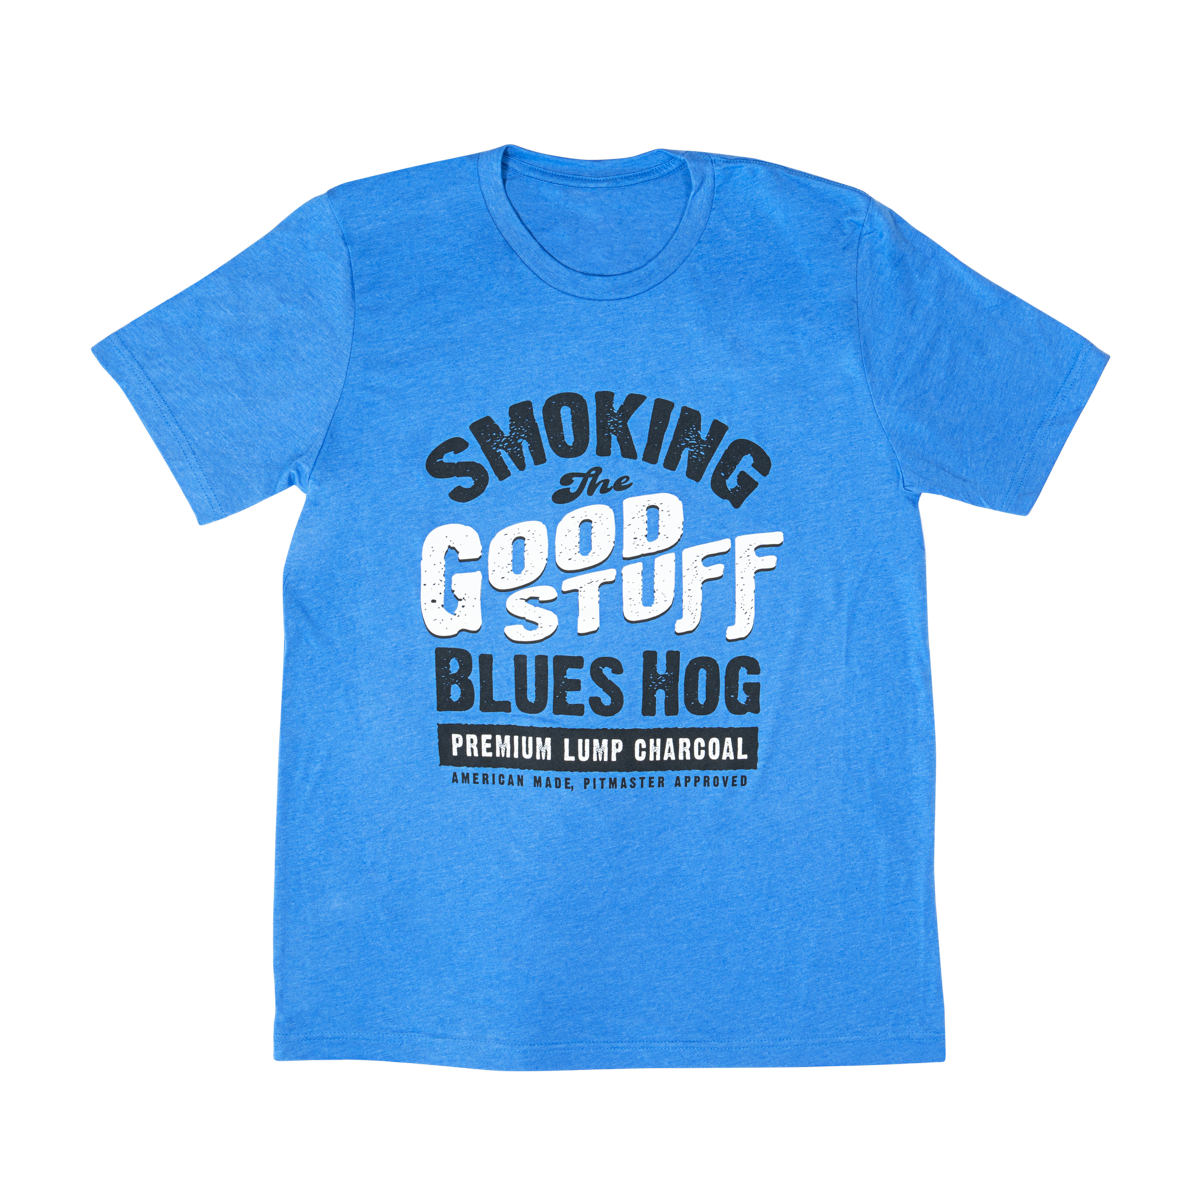 Blues Hog Smoking the Good Stuff T-Shirt - Blues Hog